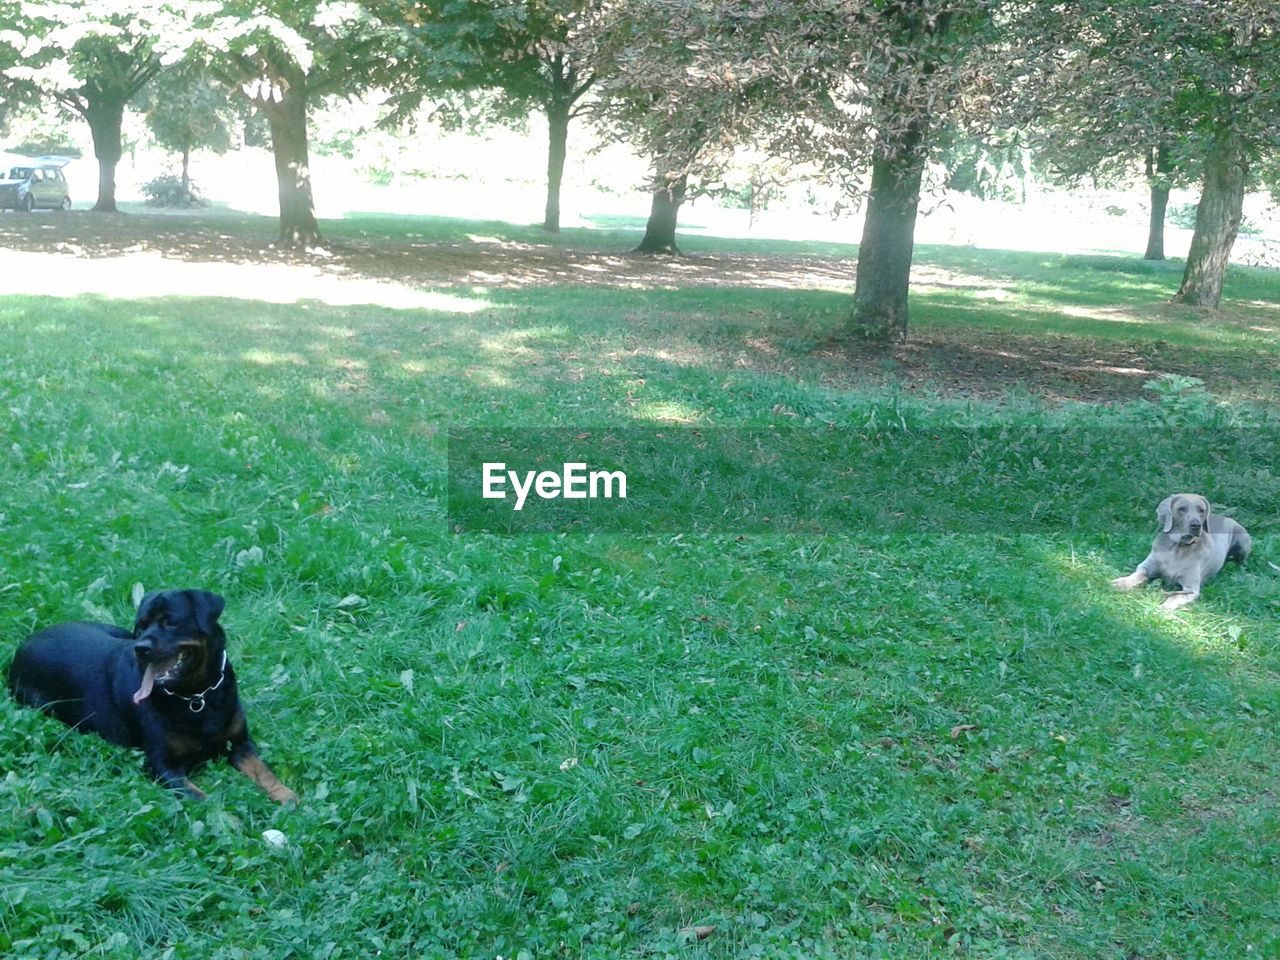 DOG STANDING ON GRASSY FIELD IN PARK